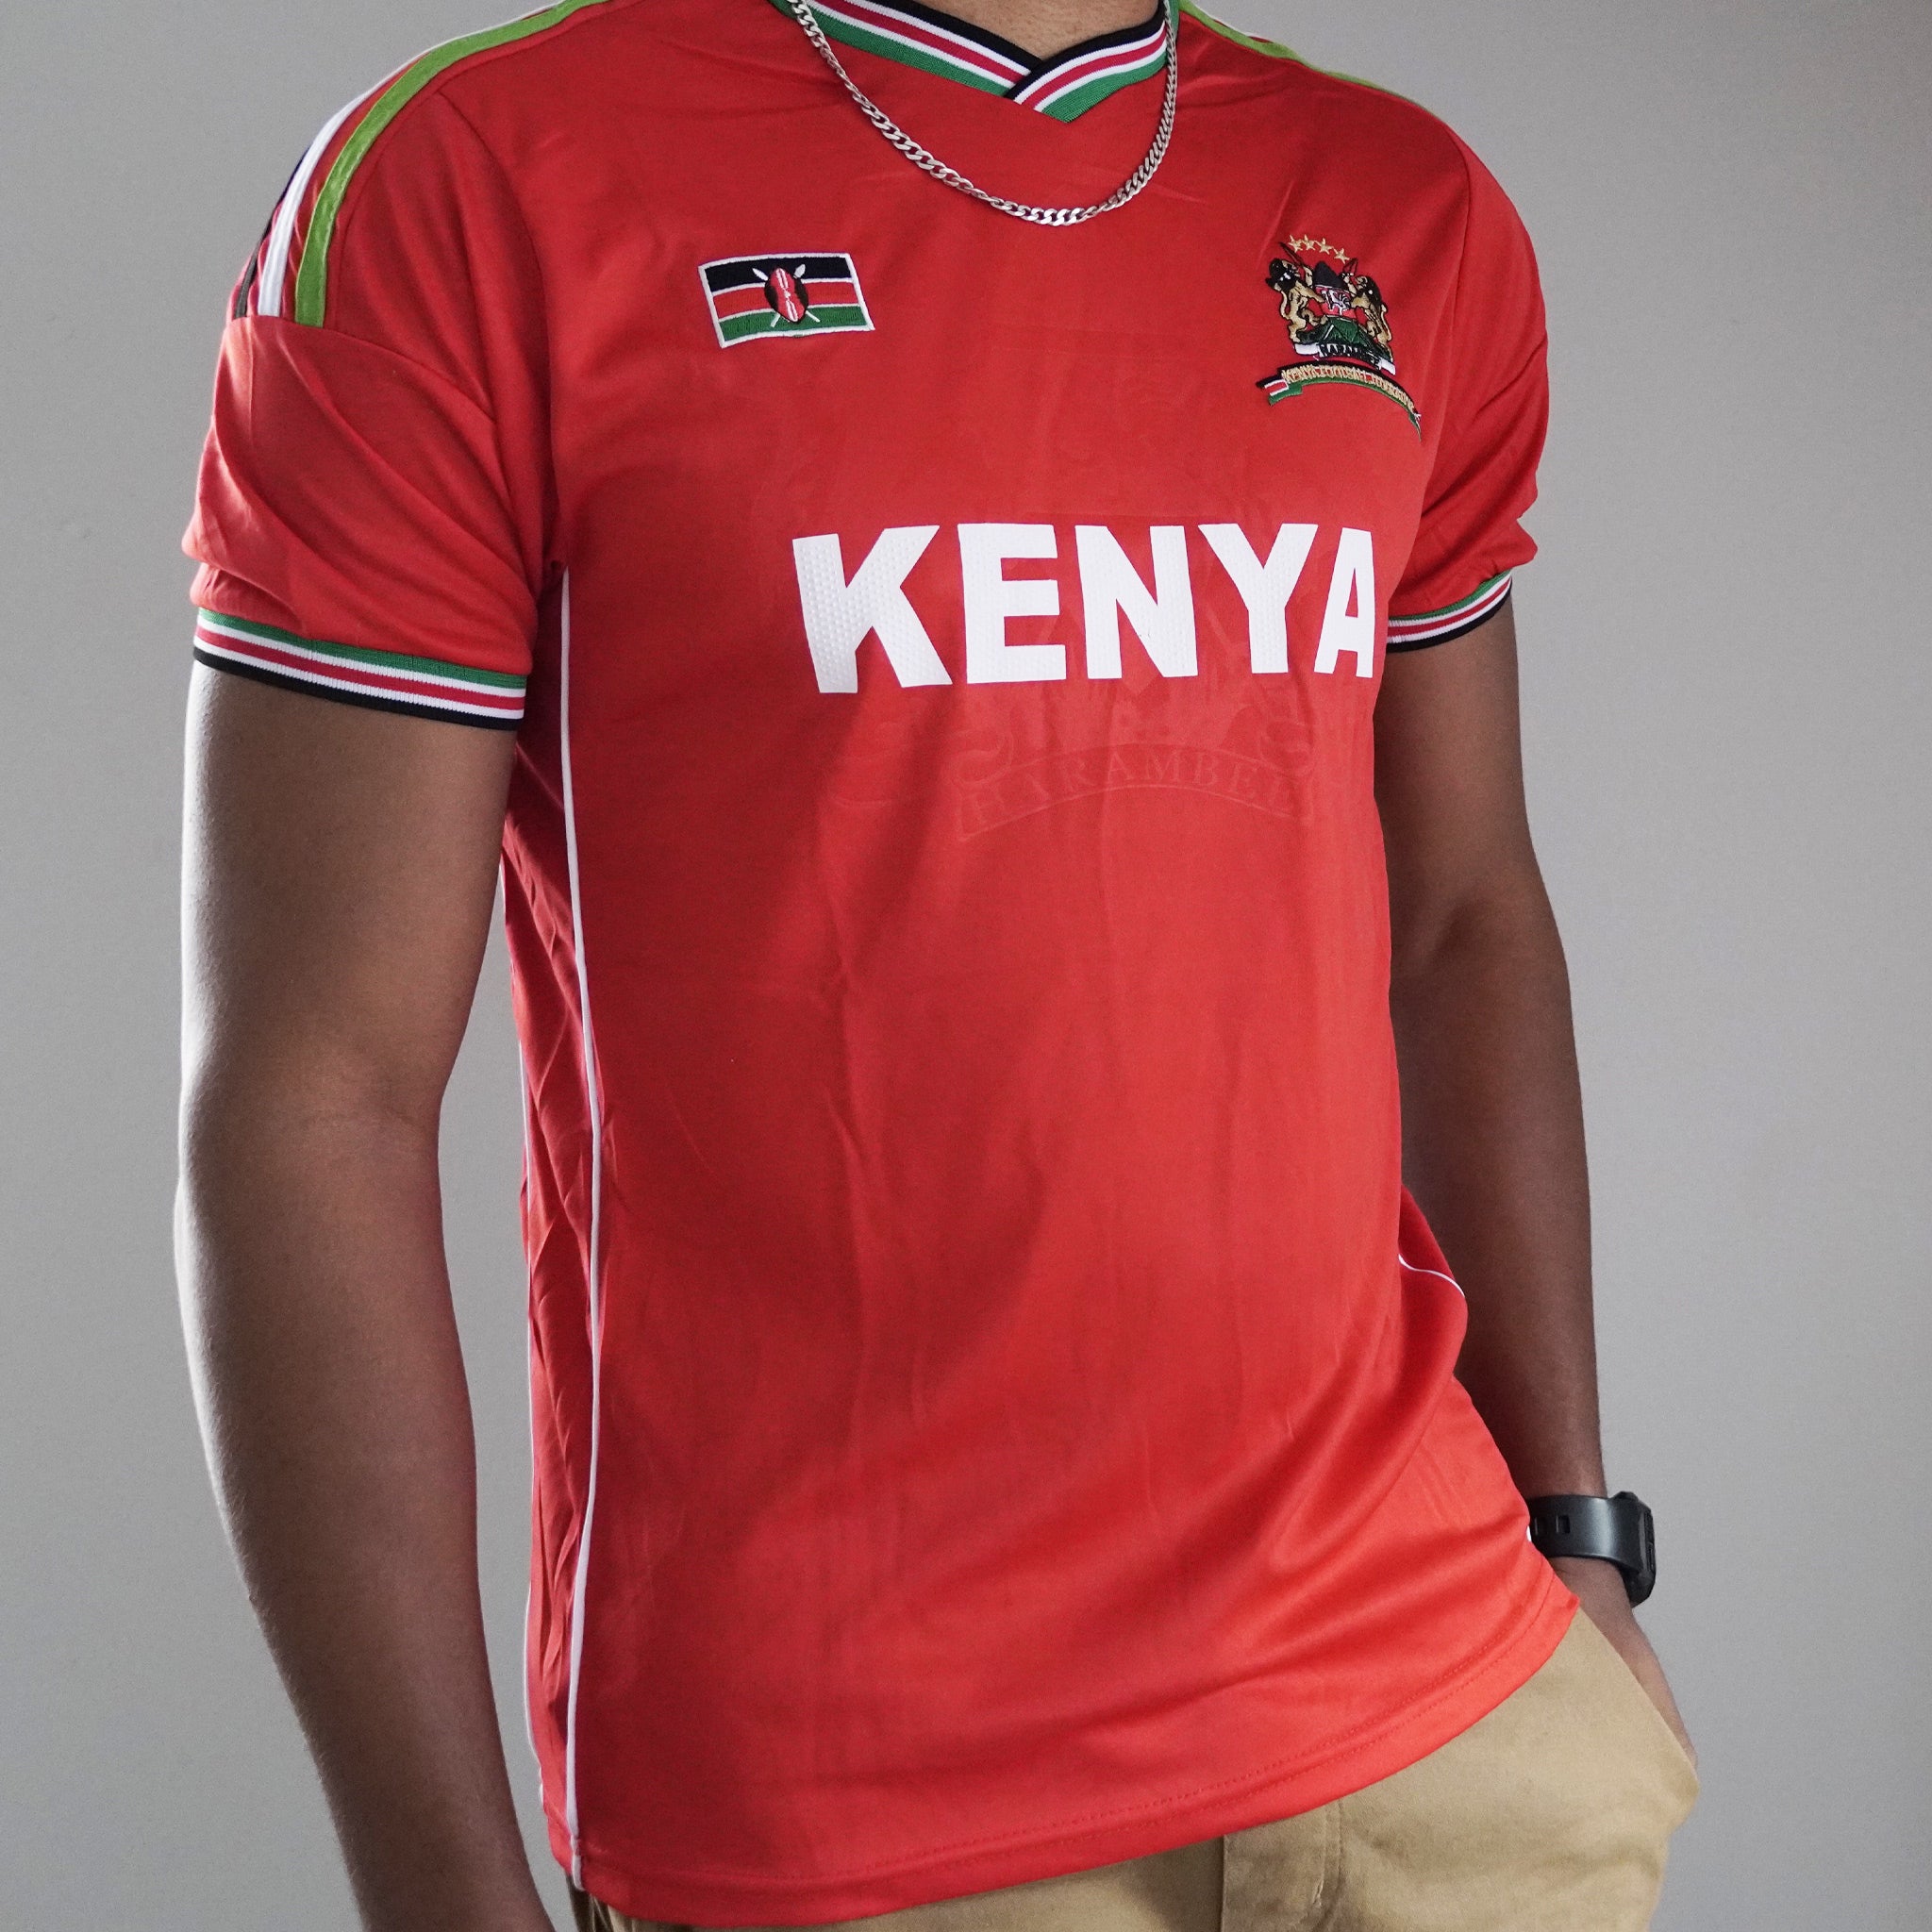 Charis Trendy Collections on X: @beth_kasinga Kenyan football jersey.  Price: 800 WhatsApp: 0718234199  / X